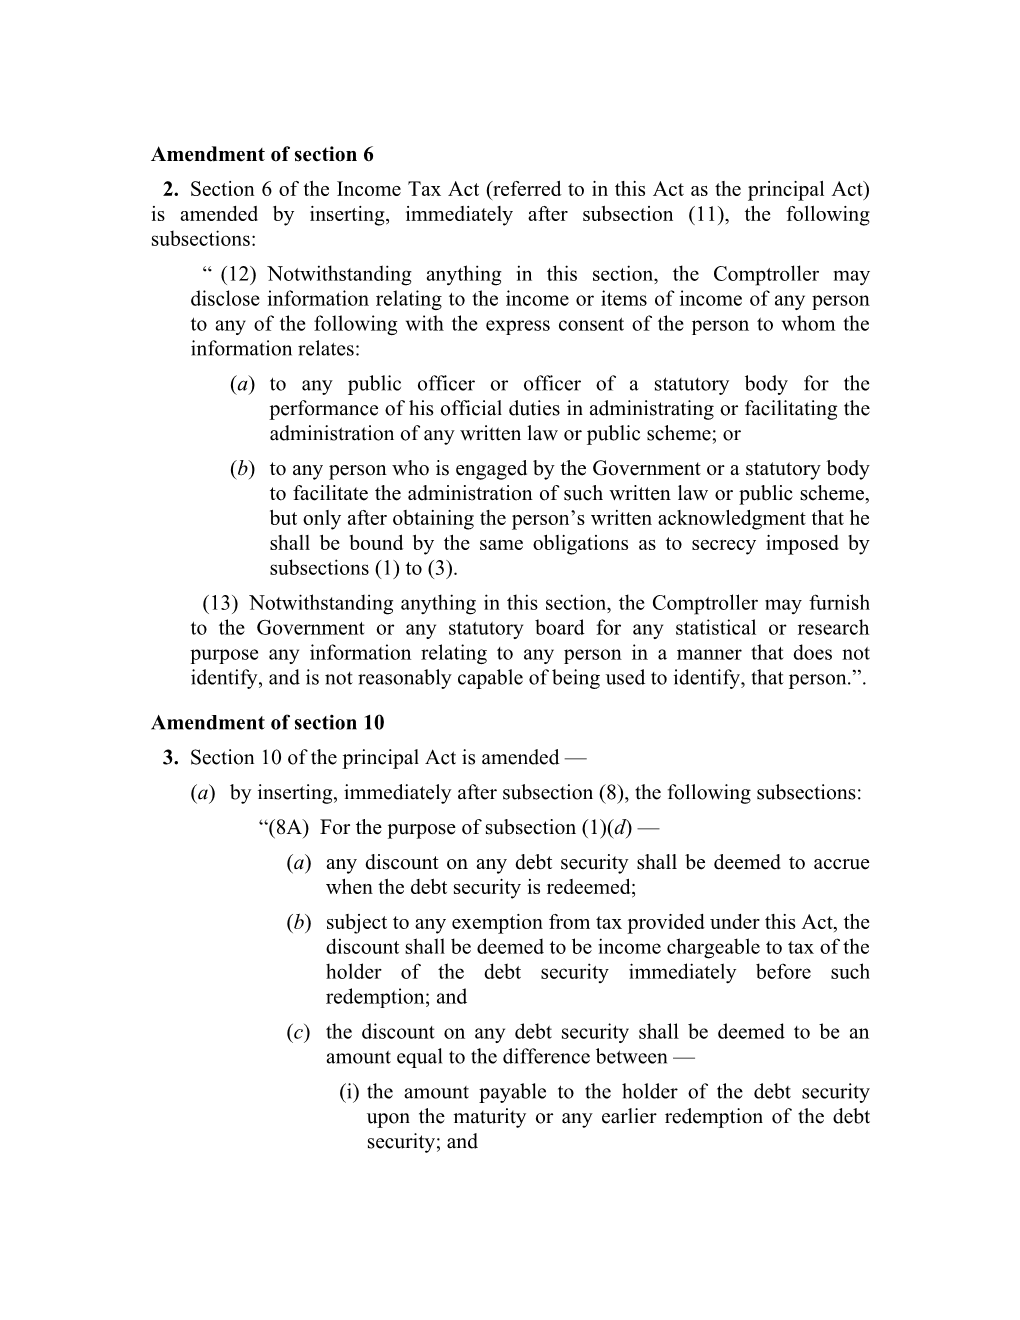 Amendment of Section 6